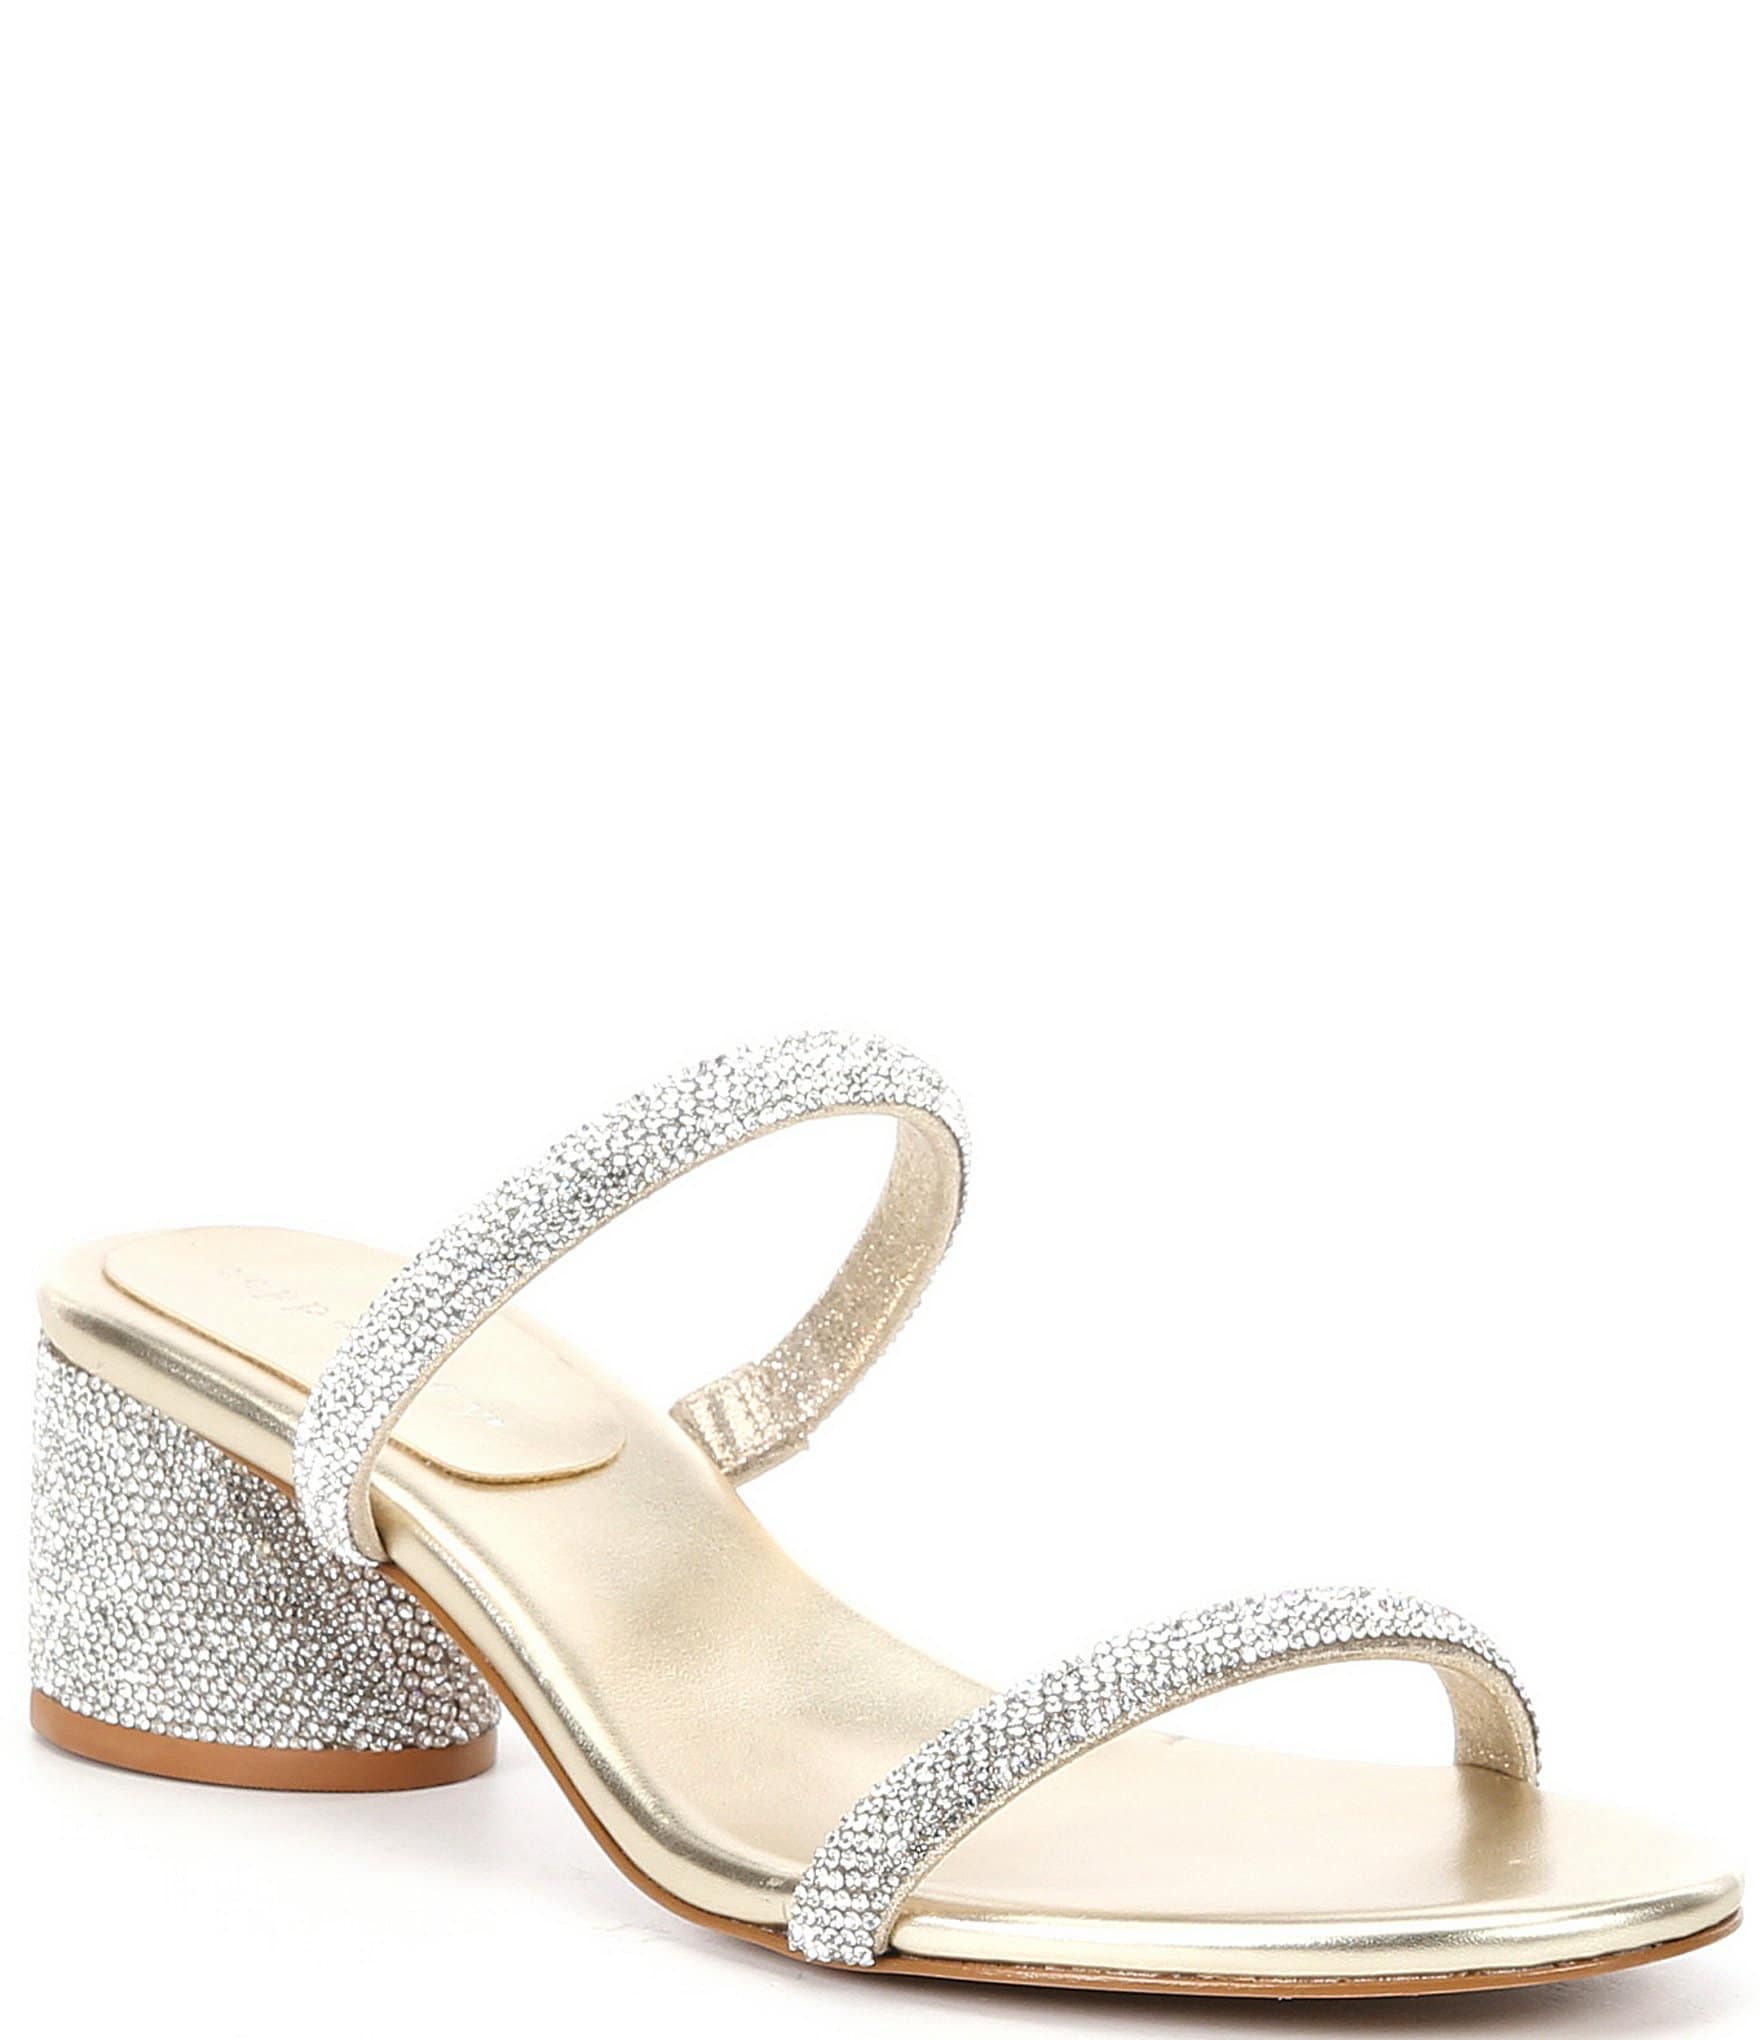 Women's Bridal & Wedding Shoes | Dillard's